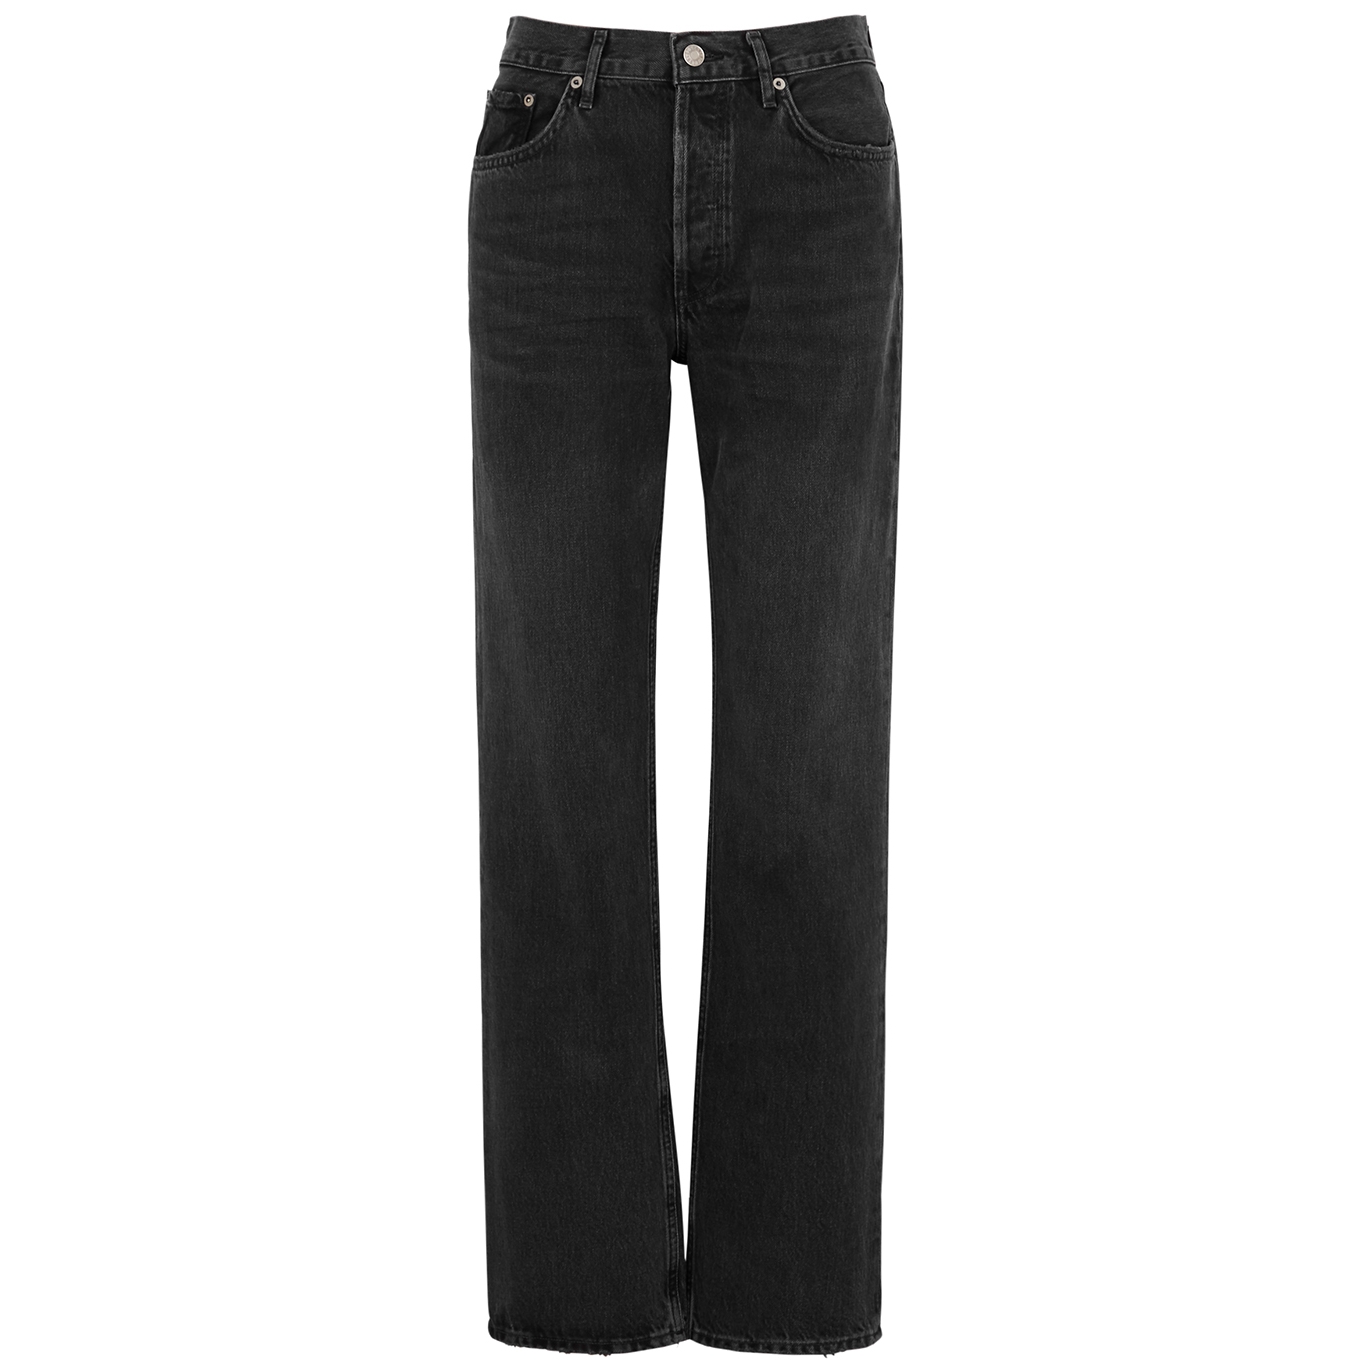 Agolde Lana Black Straight-leg Jeans - W26